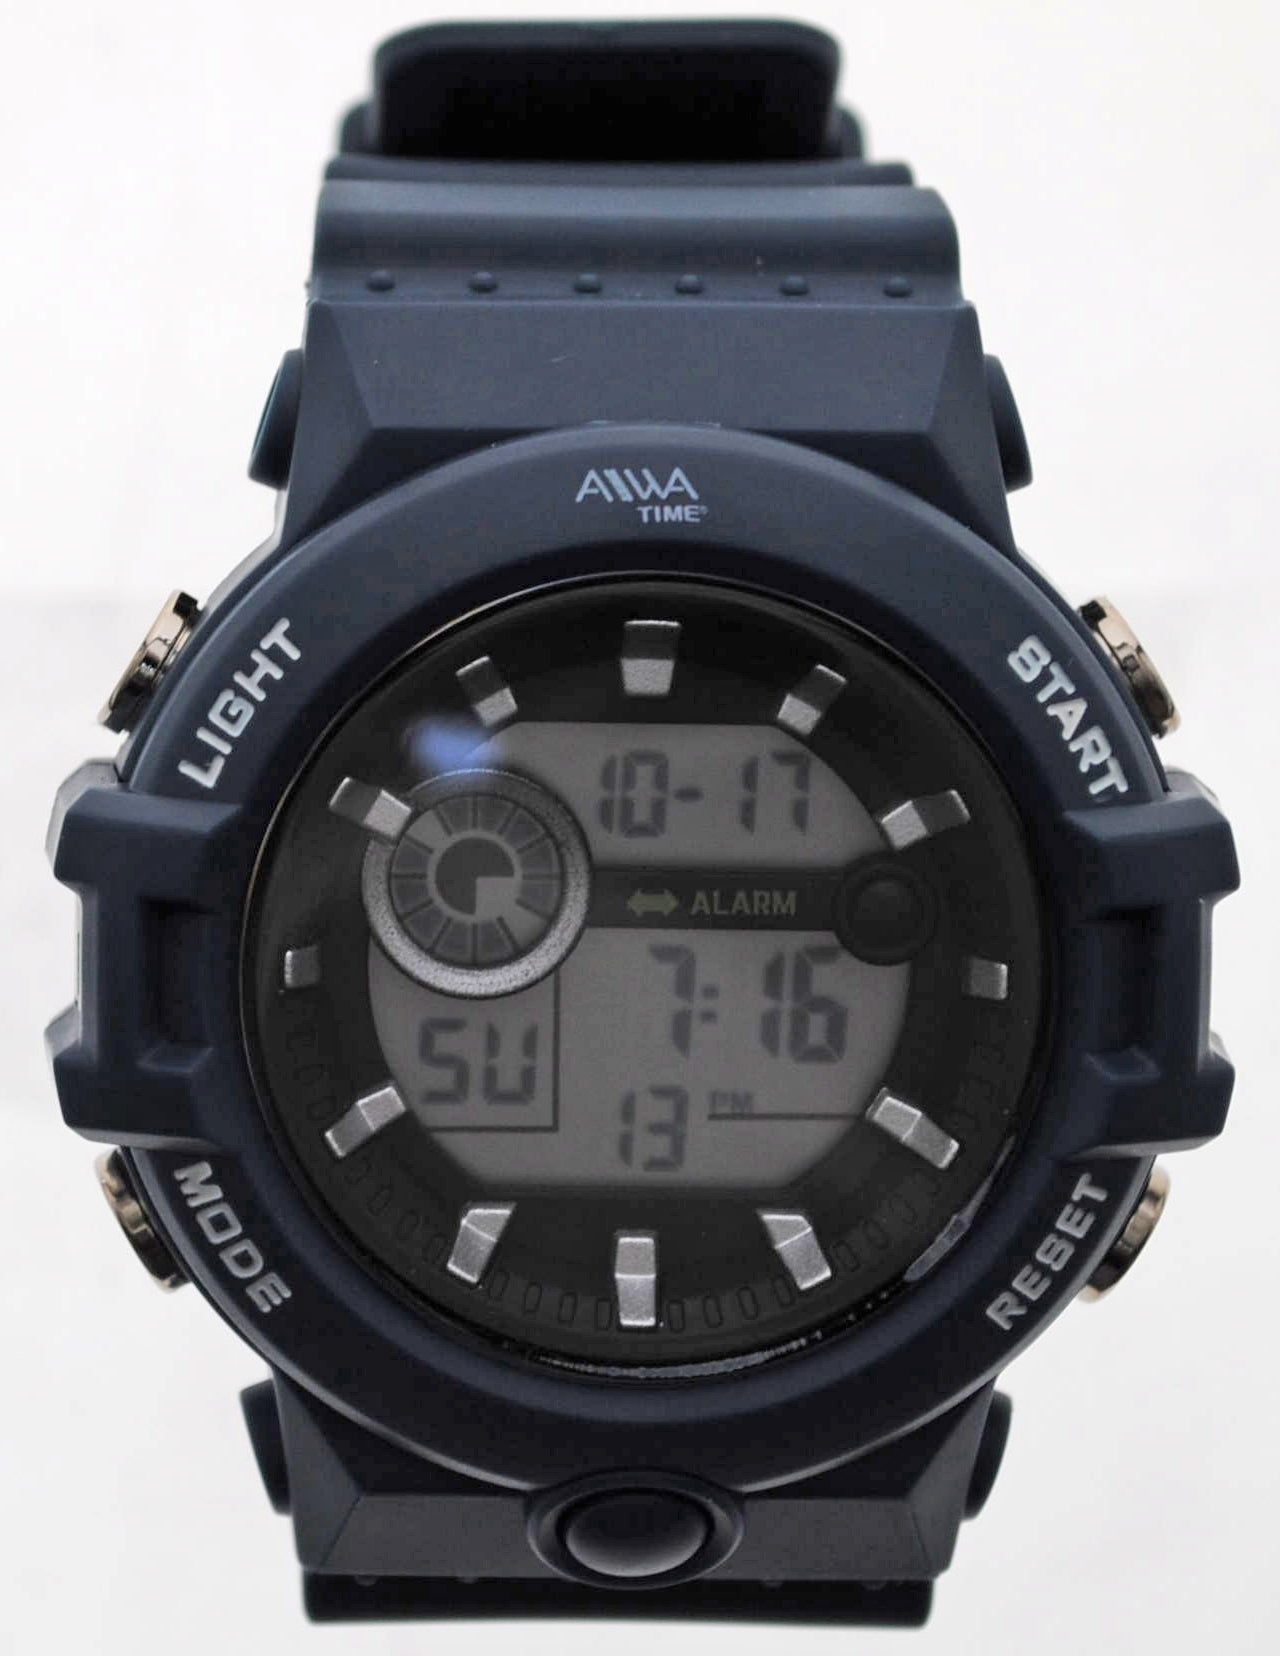 art. 10314 019AZ - AIWA Time - Reloj Digital Crono Alarma, Dama, AIWA Time, Sumergible 5 ATM